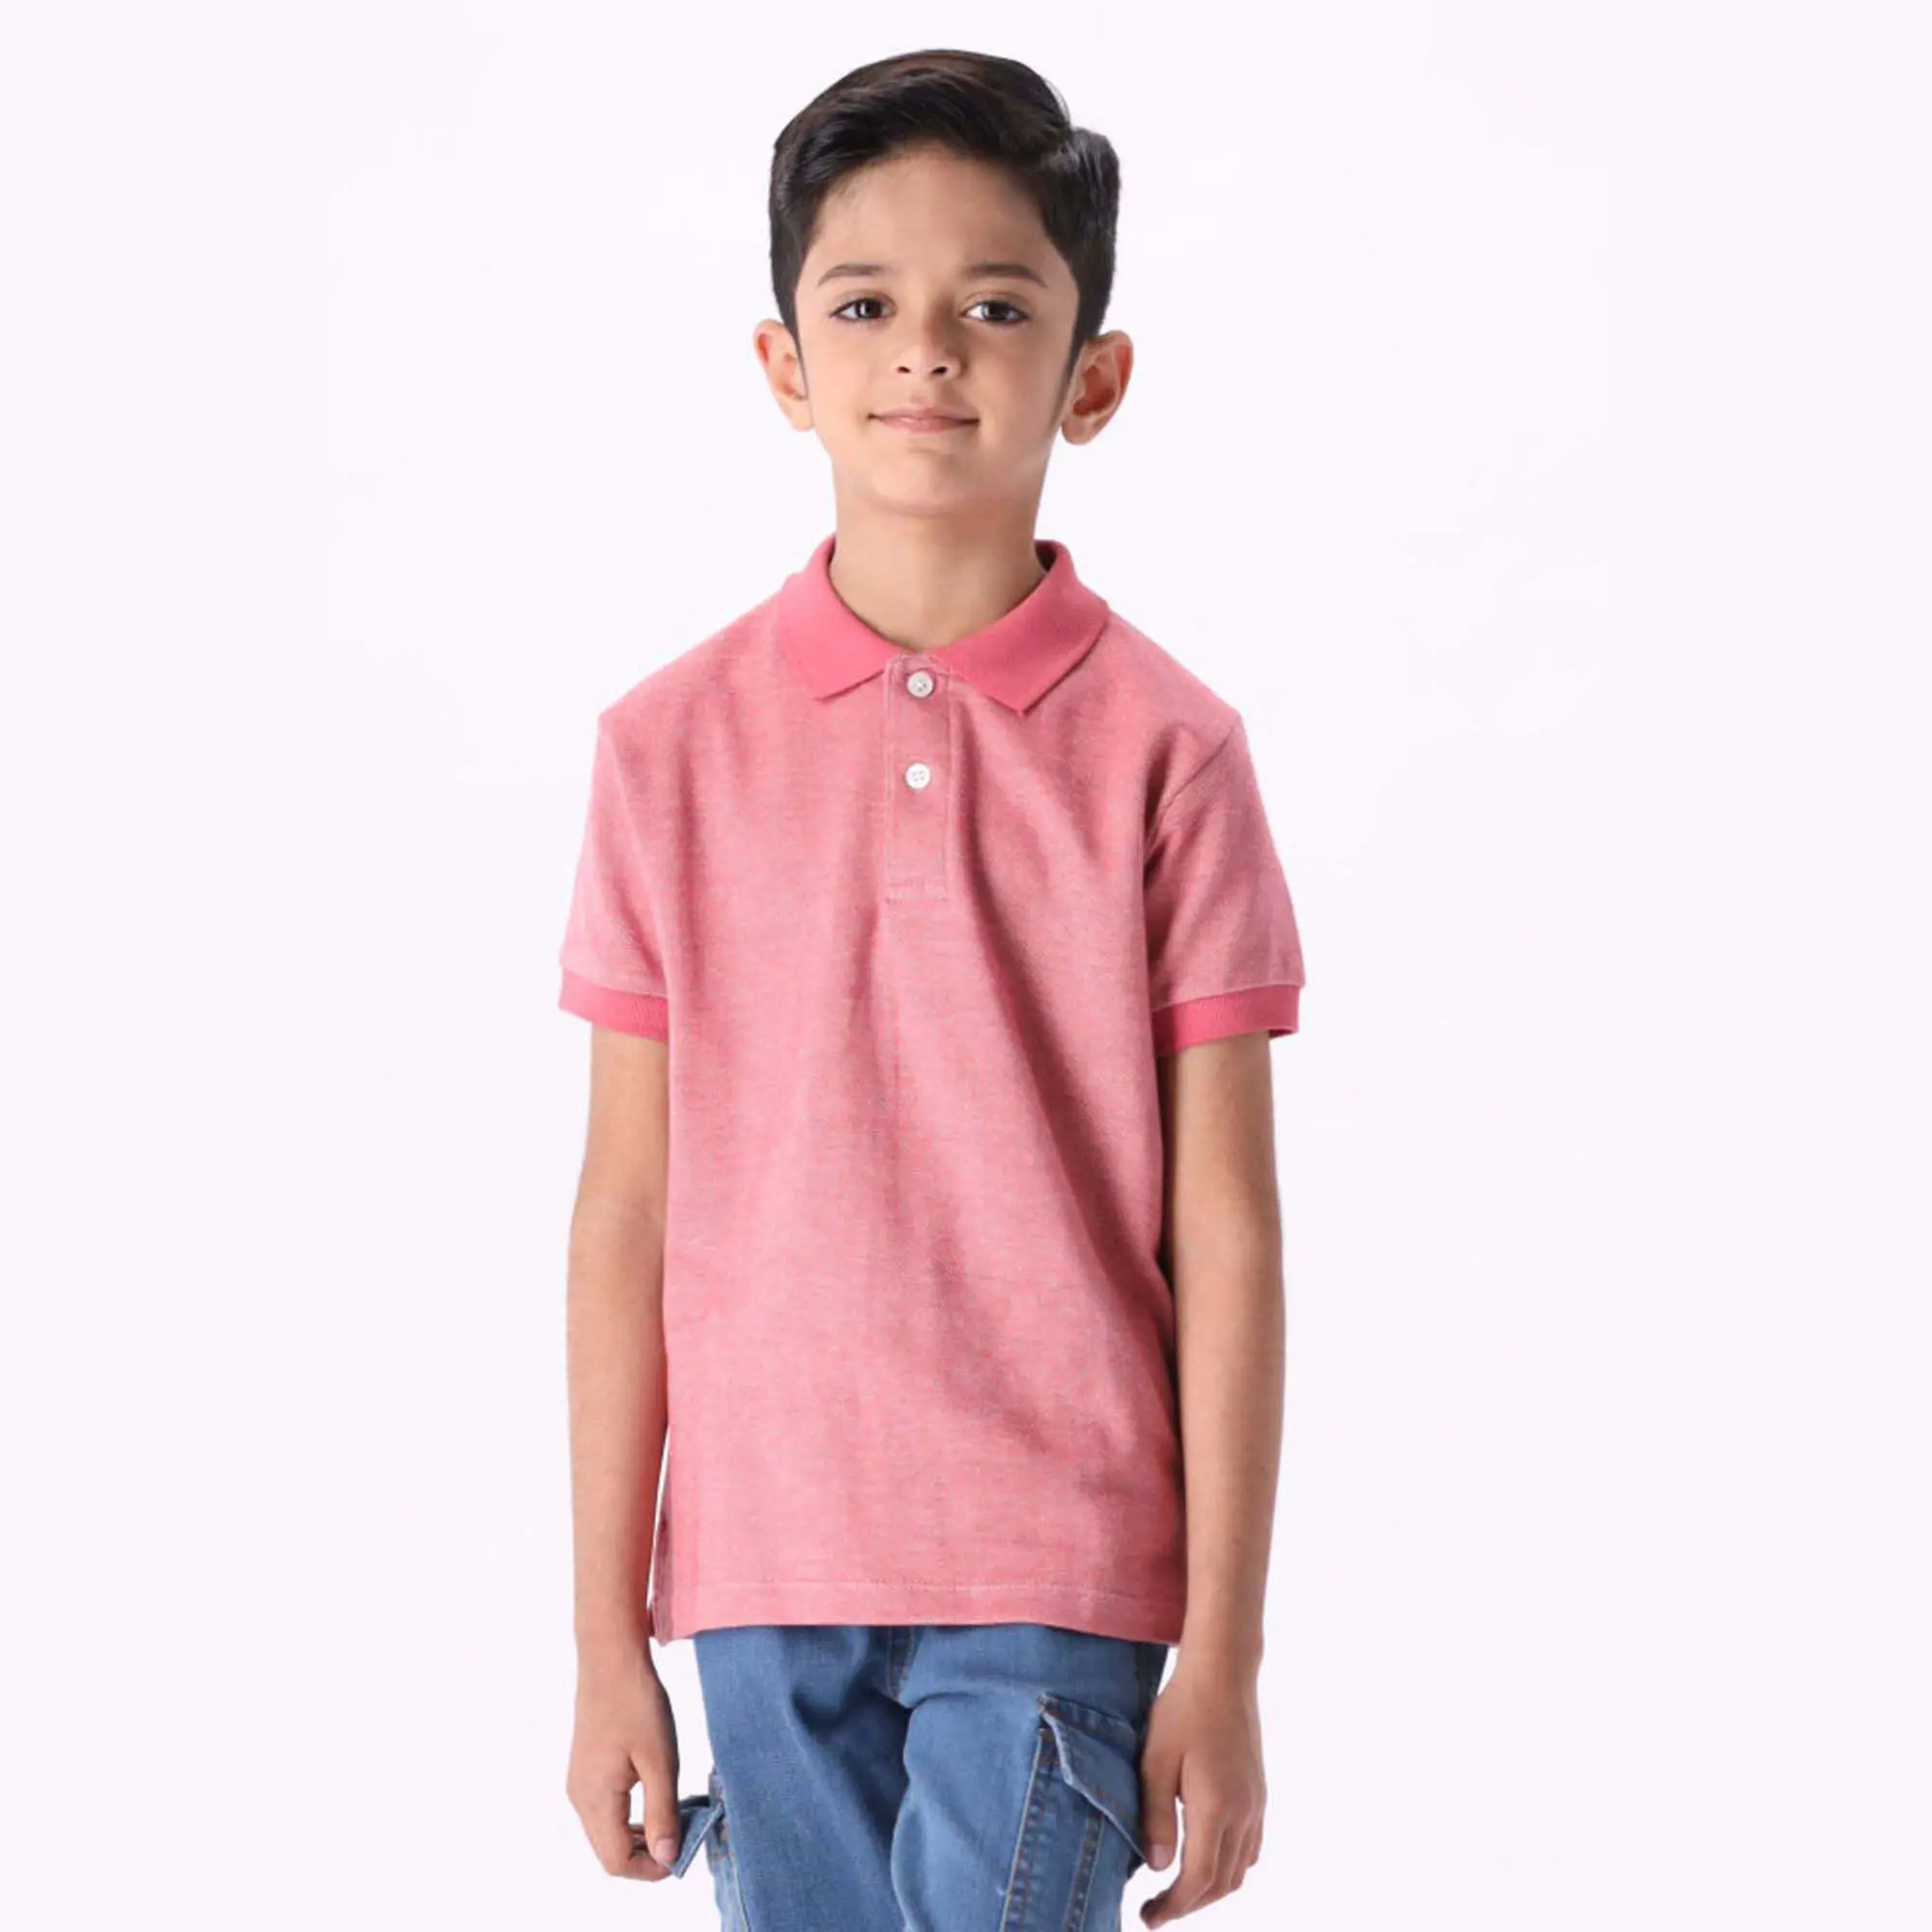 Camiseta de algodón peinado para bebés, Polo de manga corta con logotipo bordado personalizado, 100% gsm, color rosa, temporada de verano